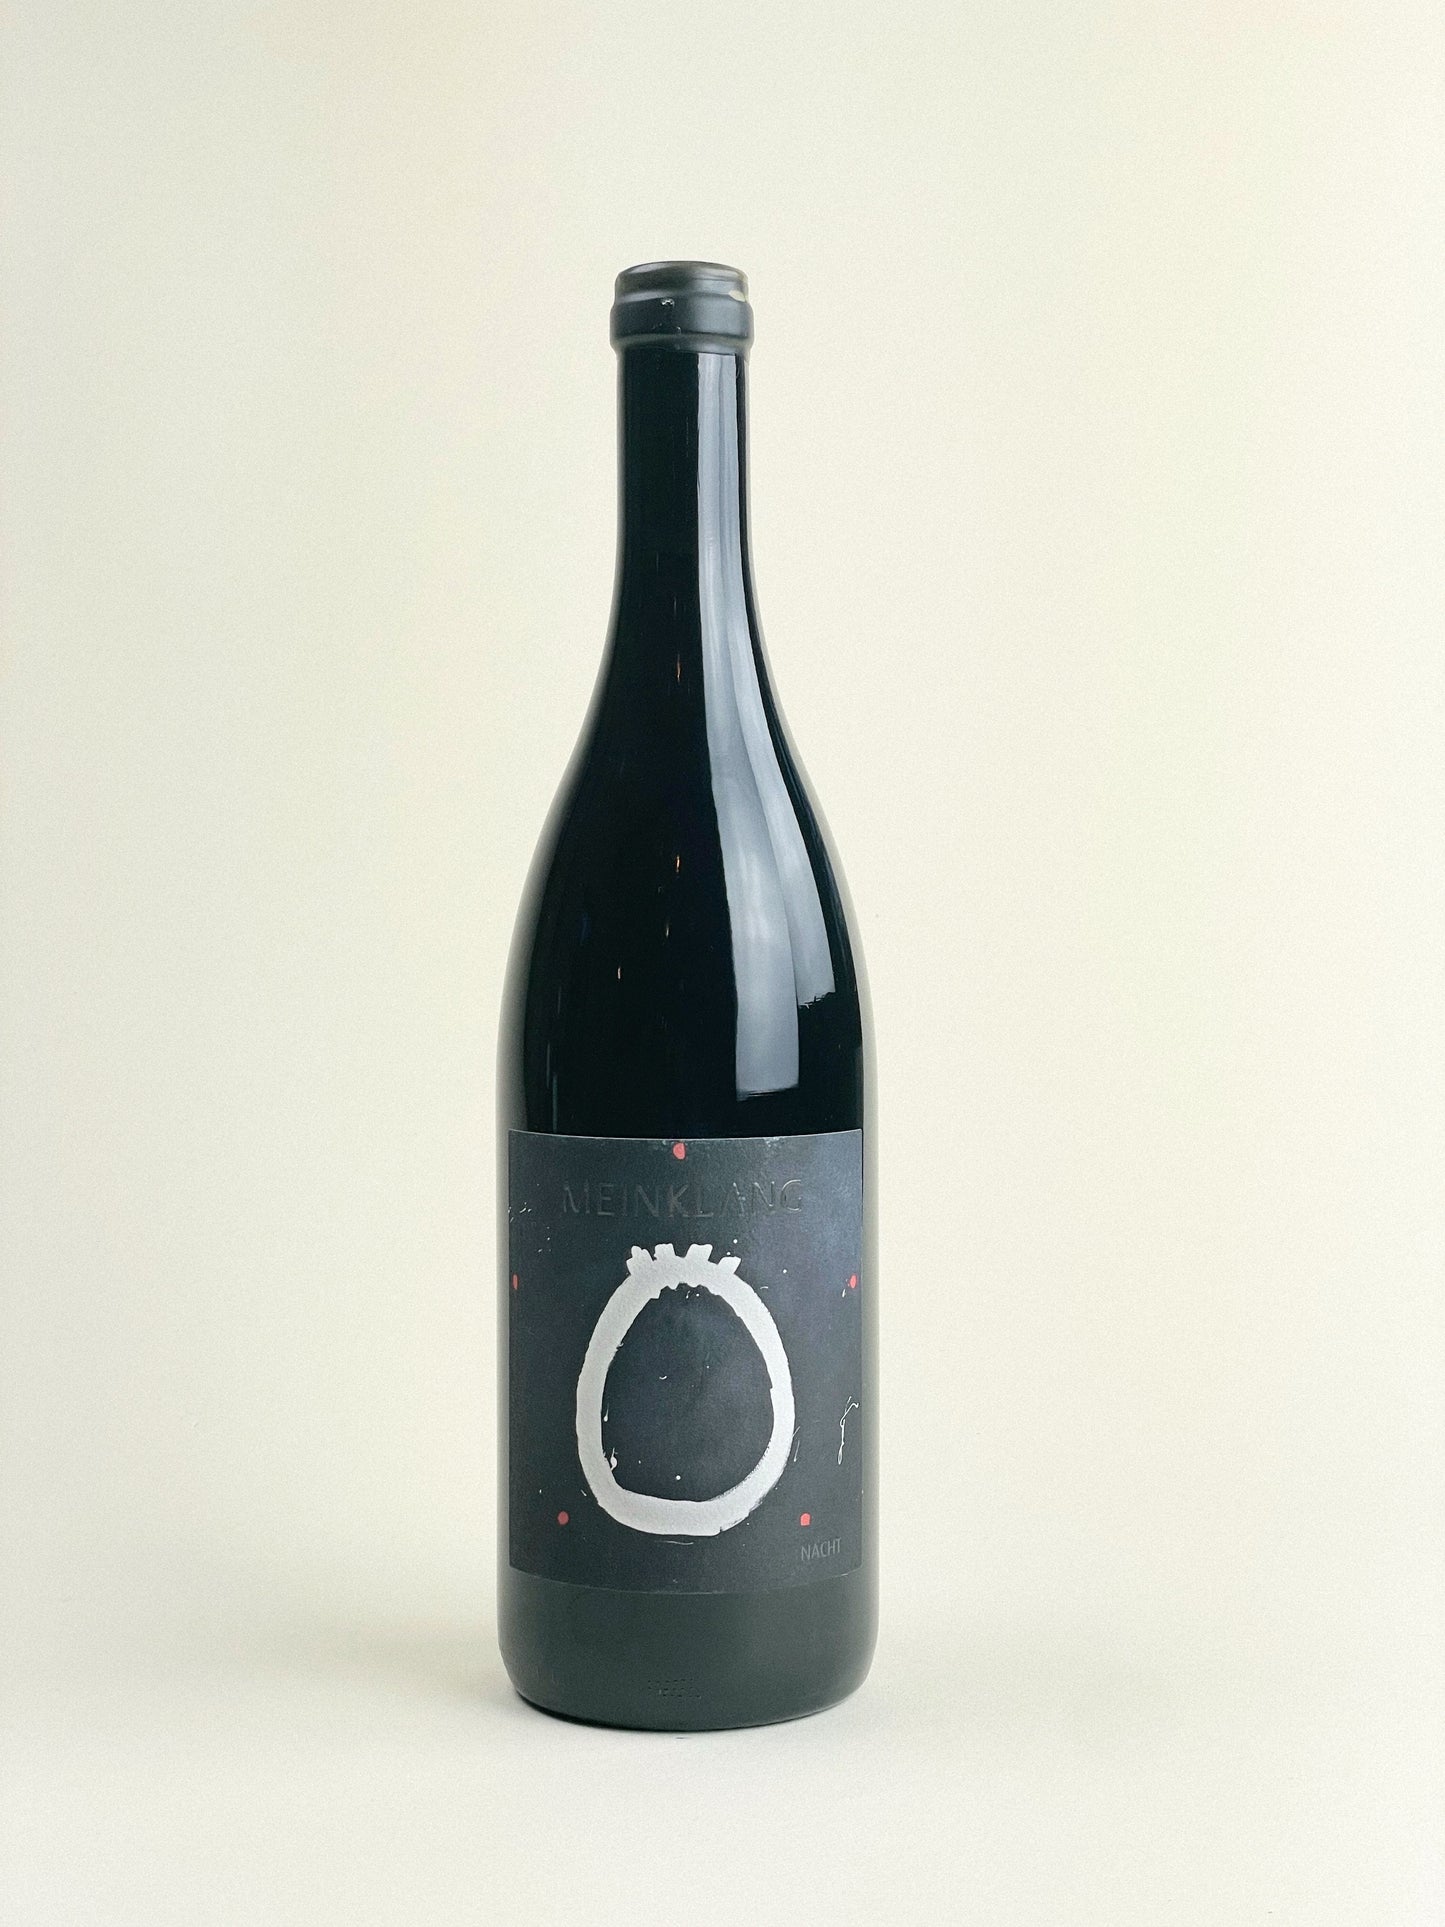 Meinklang, 'Nacht Ed. No. 3' Pinot Noir, Burgenland, Austria 2020